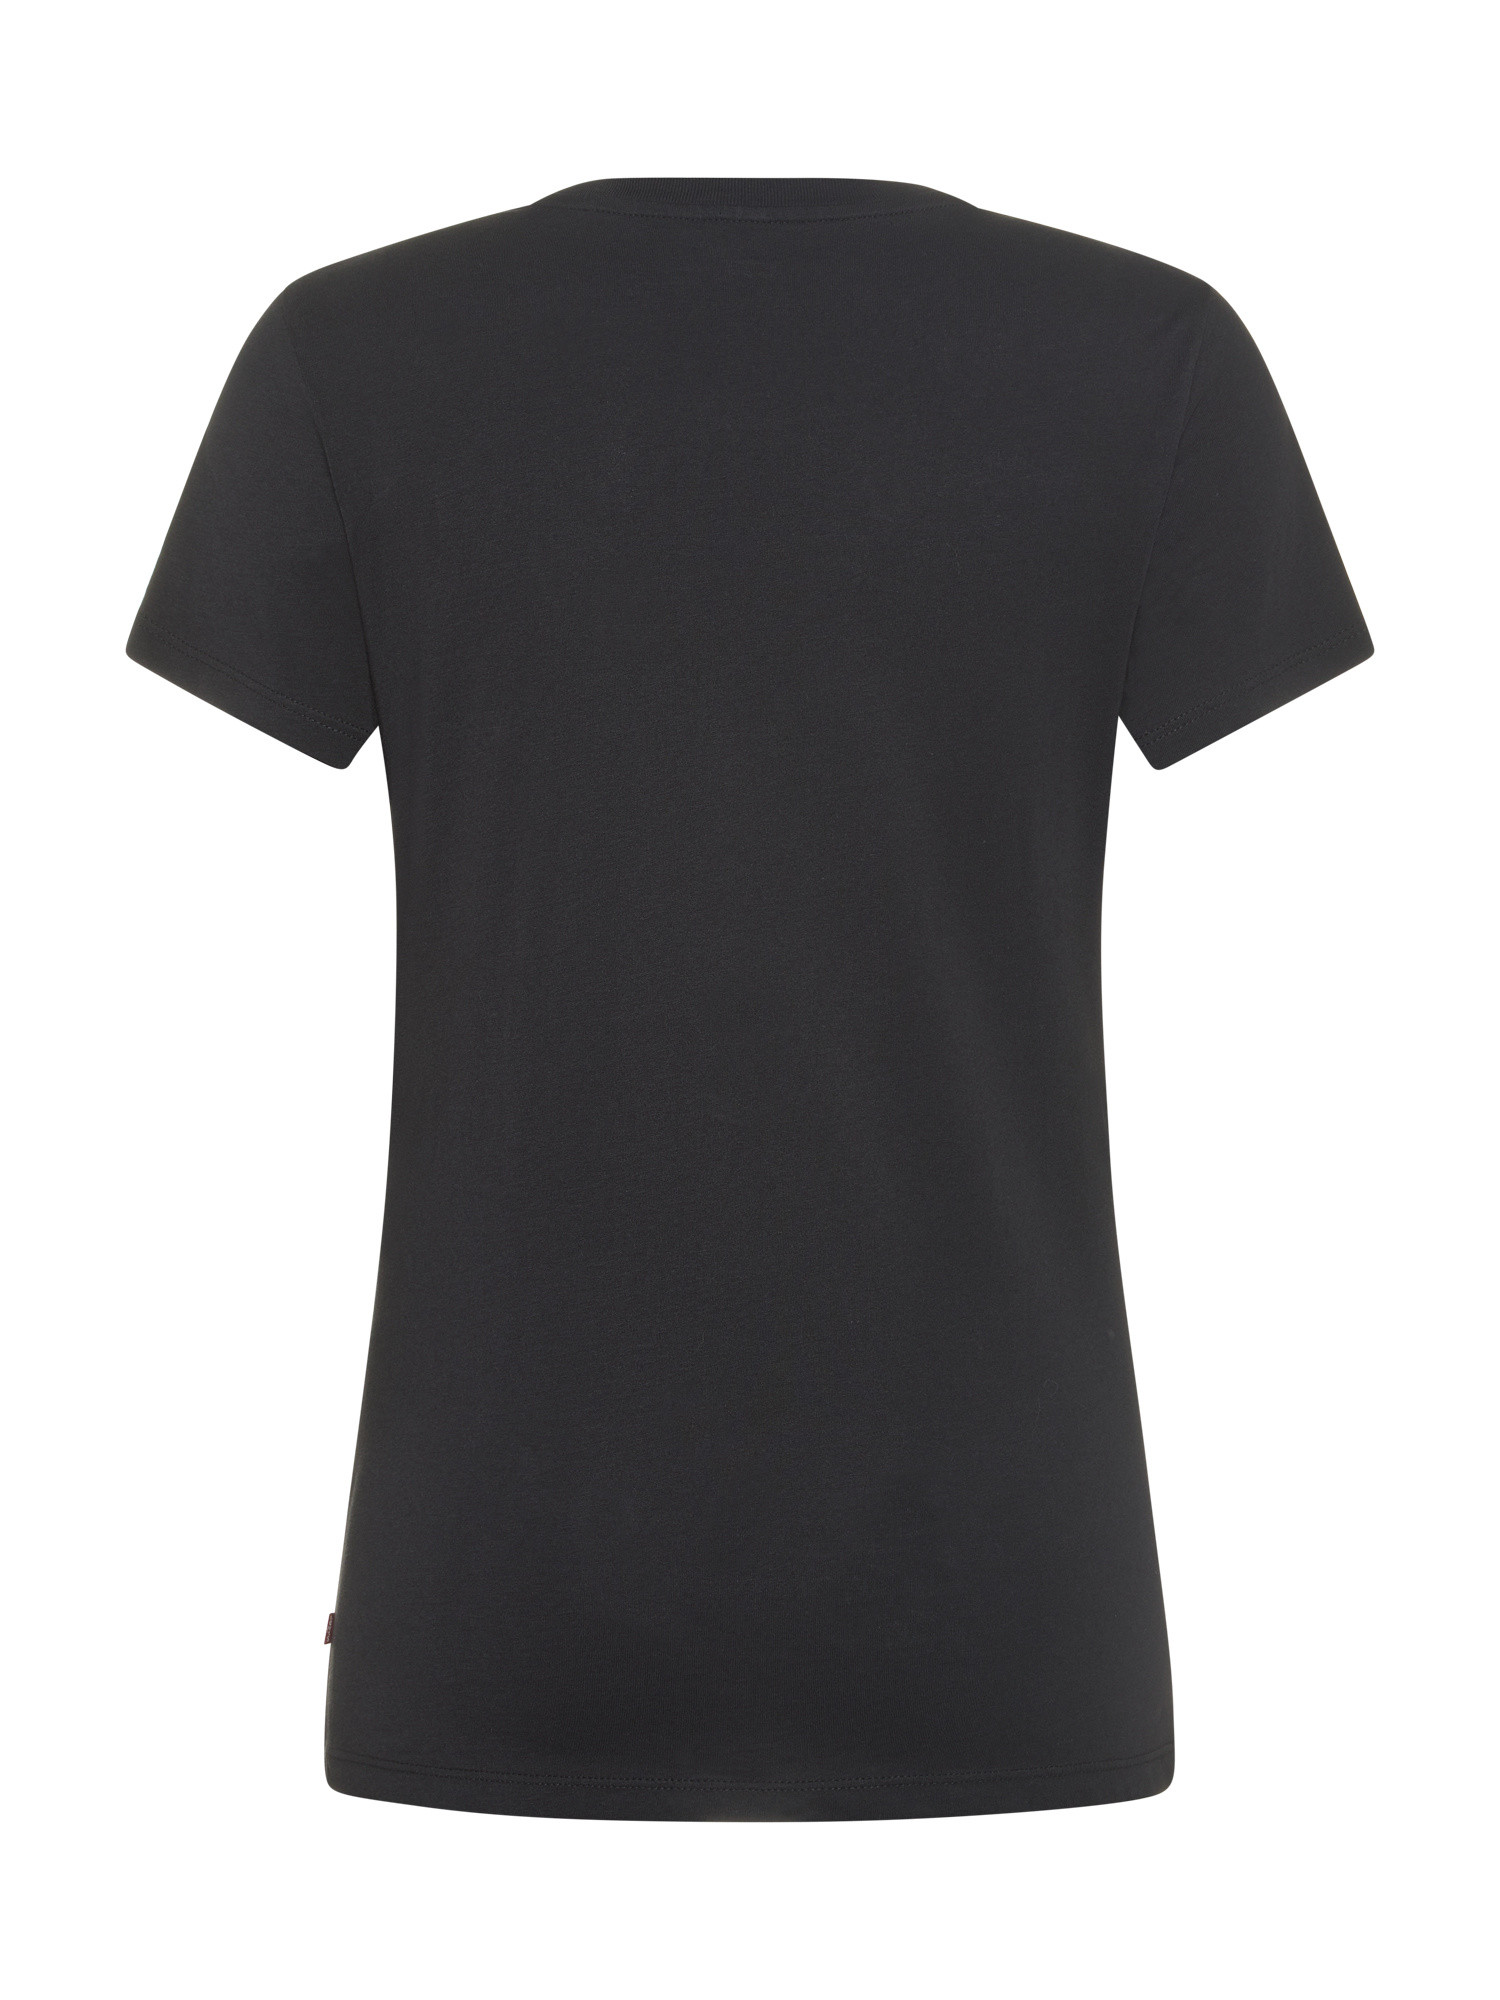 Levi's - Cotton T-shirt with logo print, Black, large image number 1